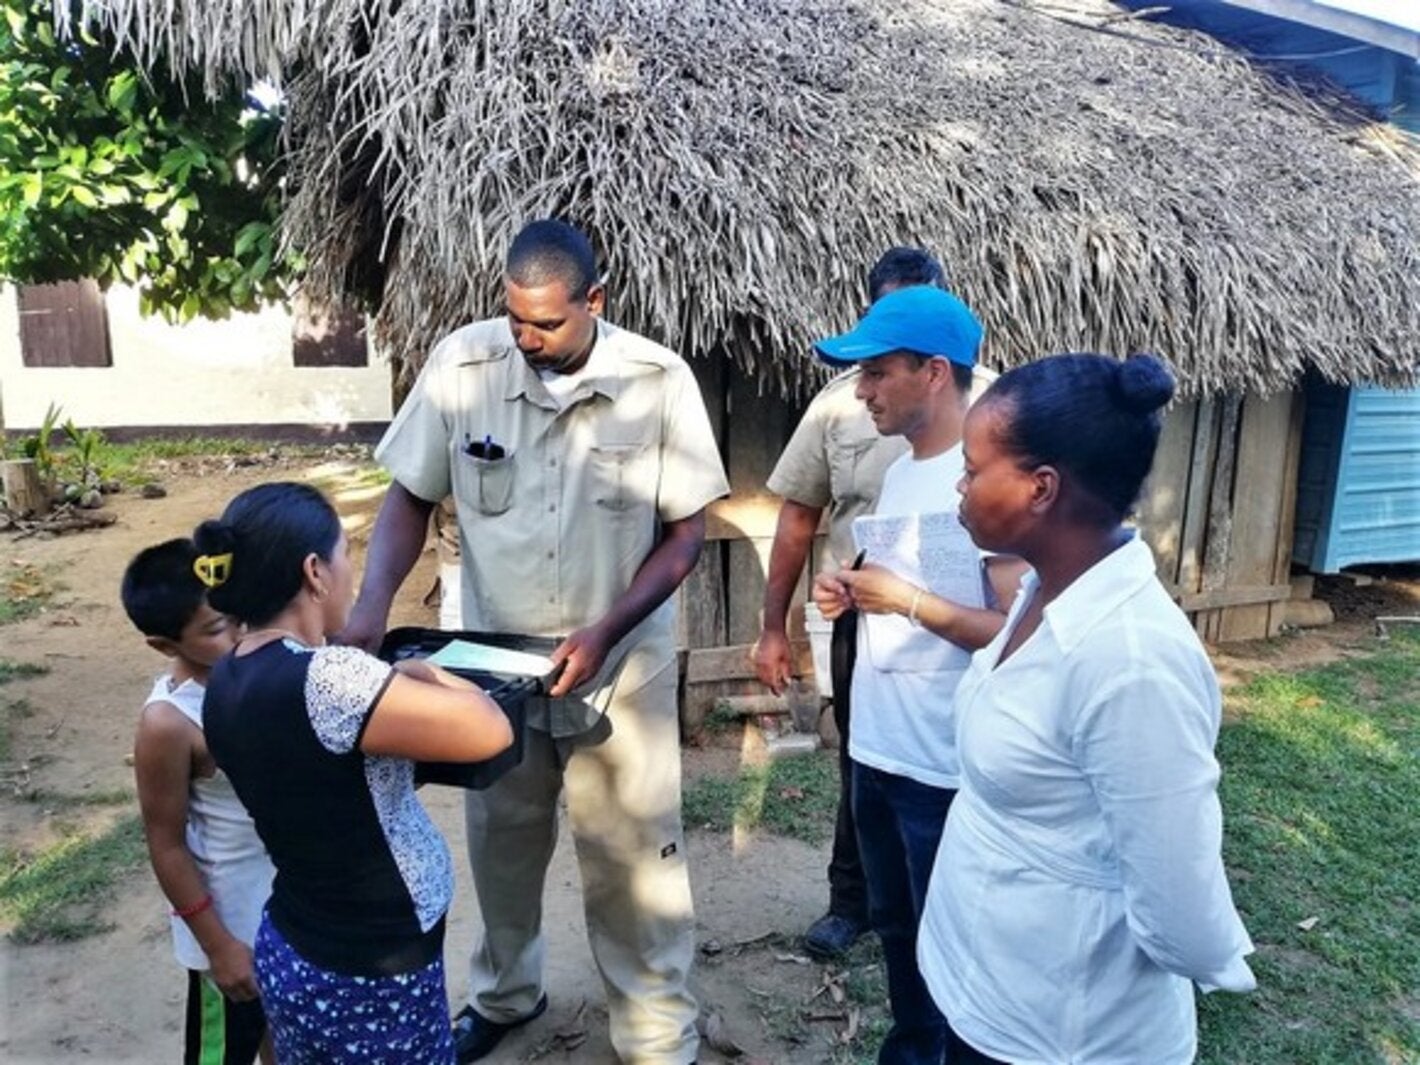 Belize's national malaria program